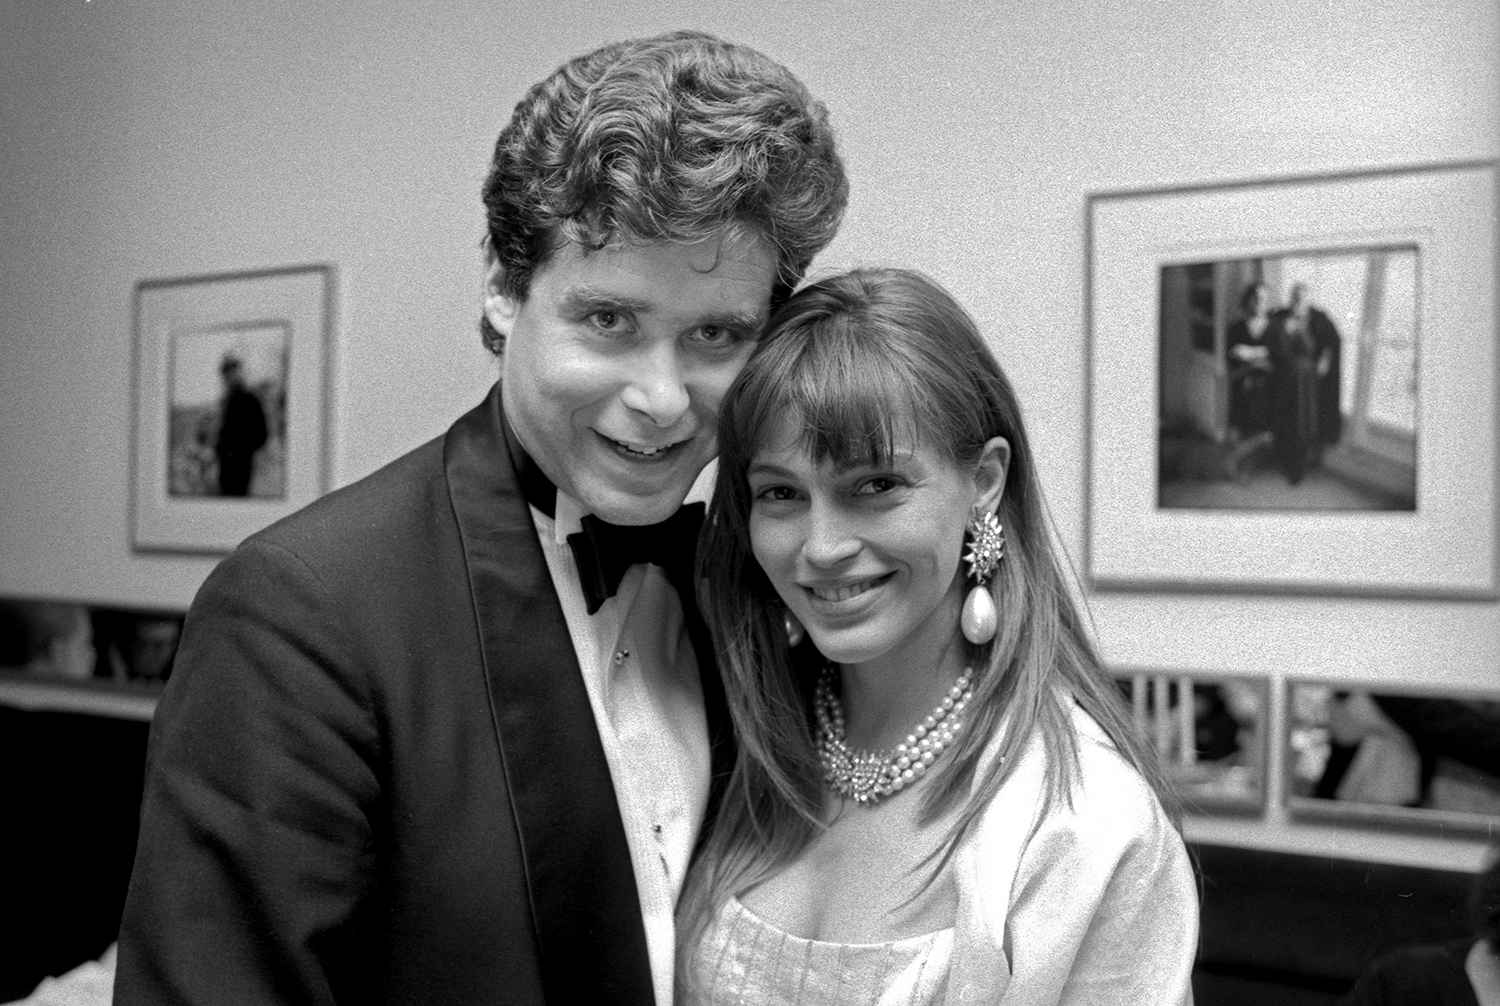 Jay Mcinerney with Marla Hanson, NYC, 1989